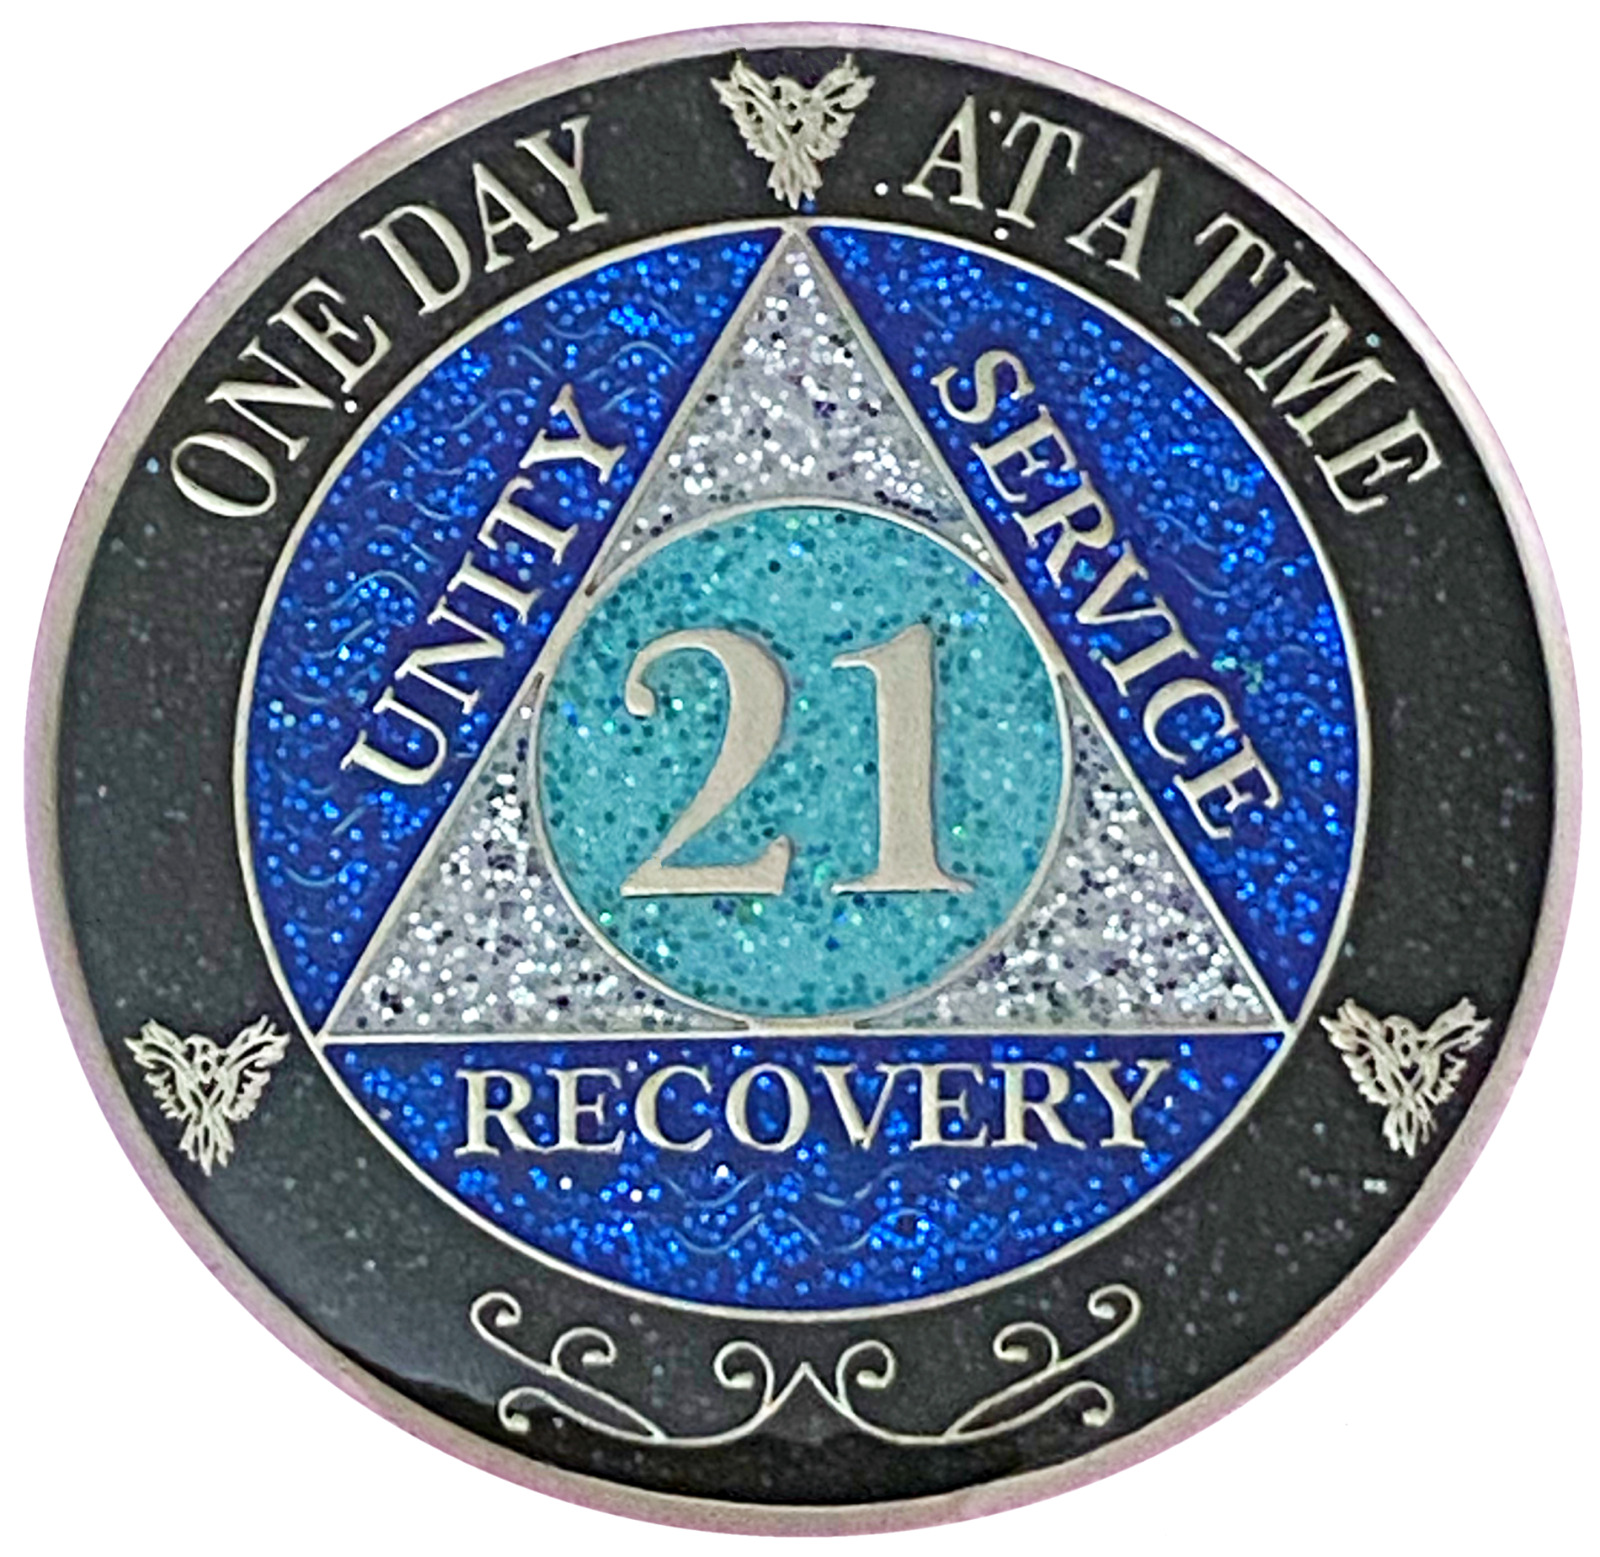 Aa 21 Year Medallion, Black Rainbow, Blue Glitter, Alcoholics Anonymous Coin